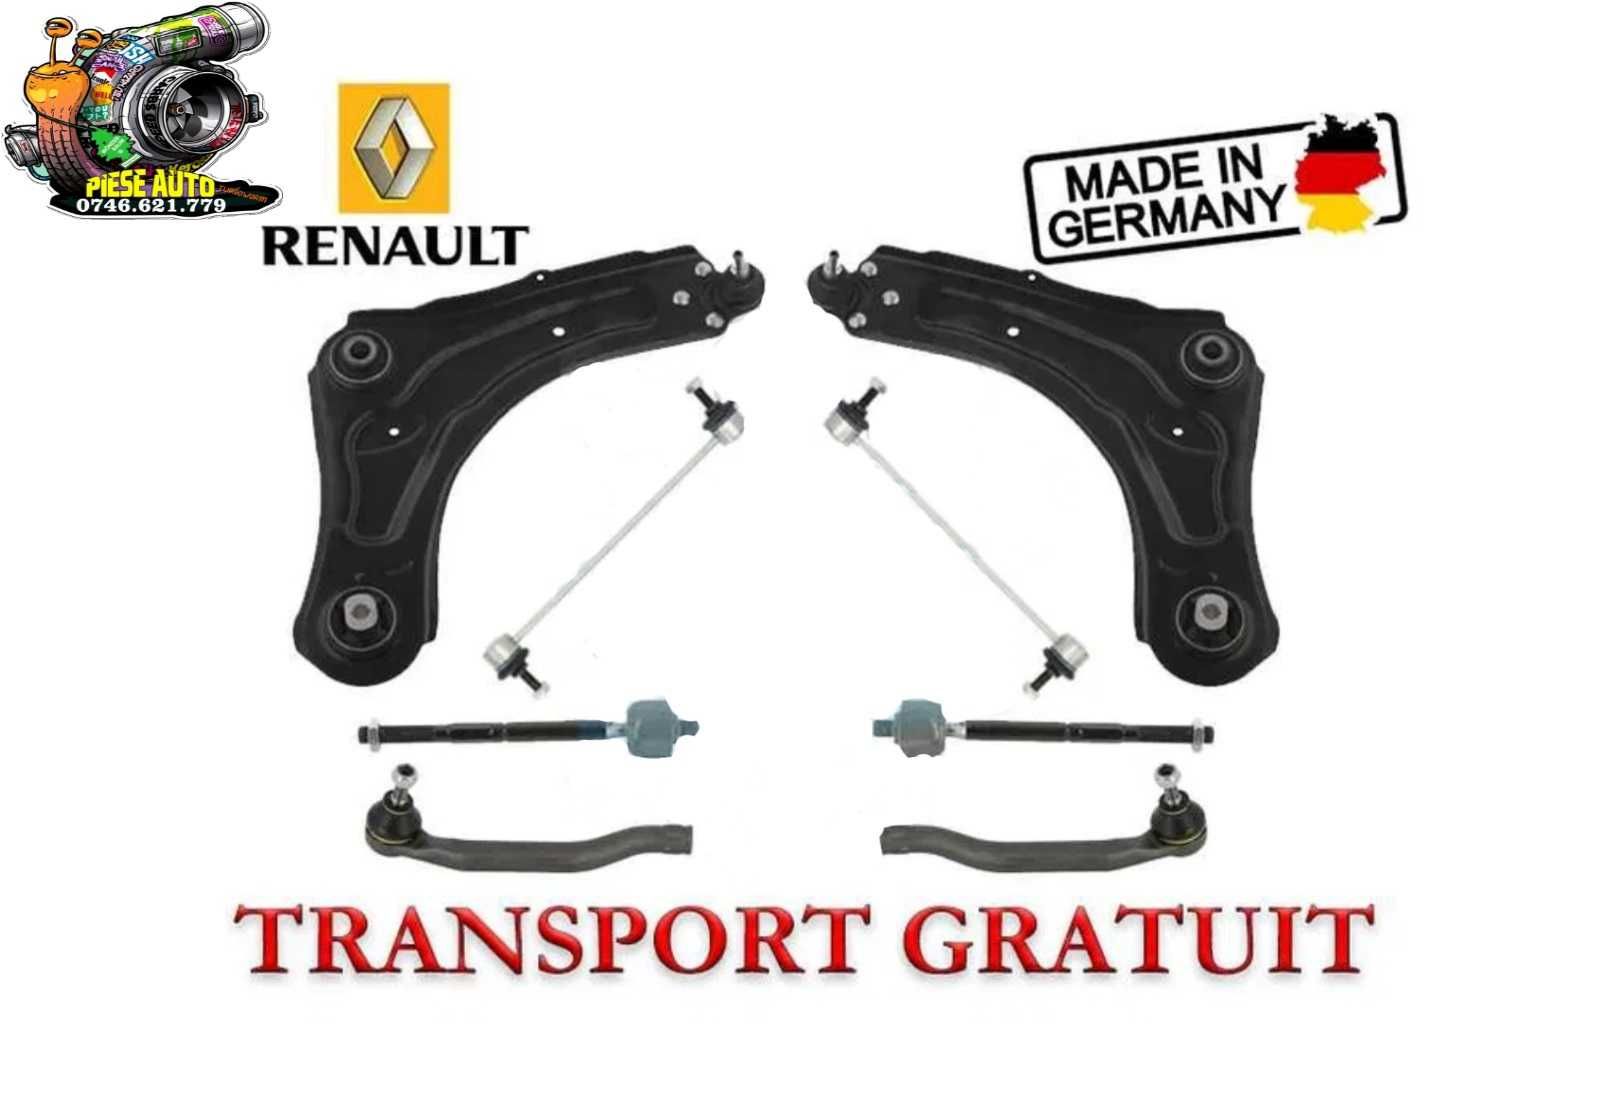 Kit brate Renault Megane 3 2008-2016 + Transport Gratuit